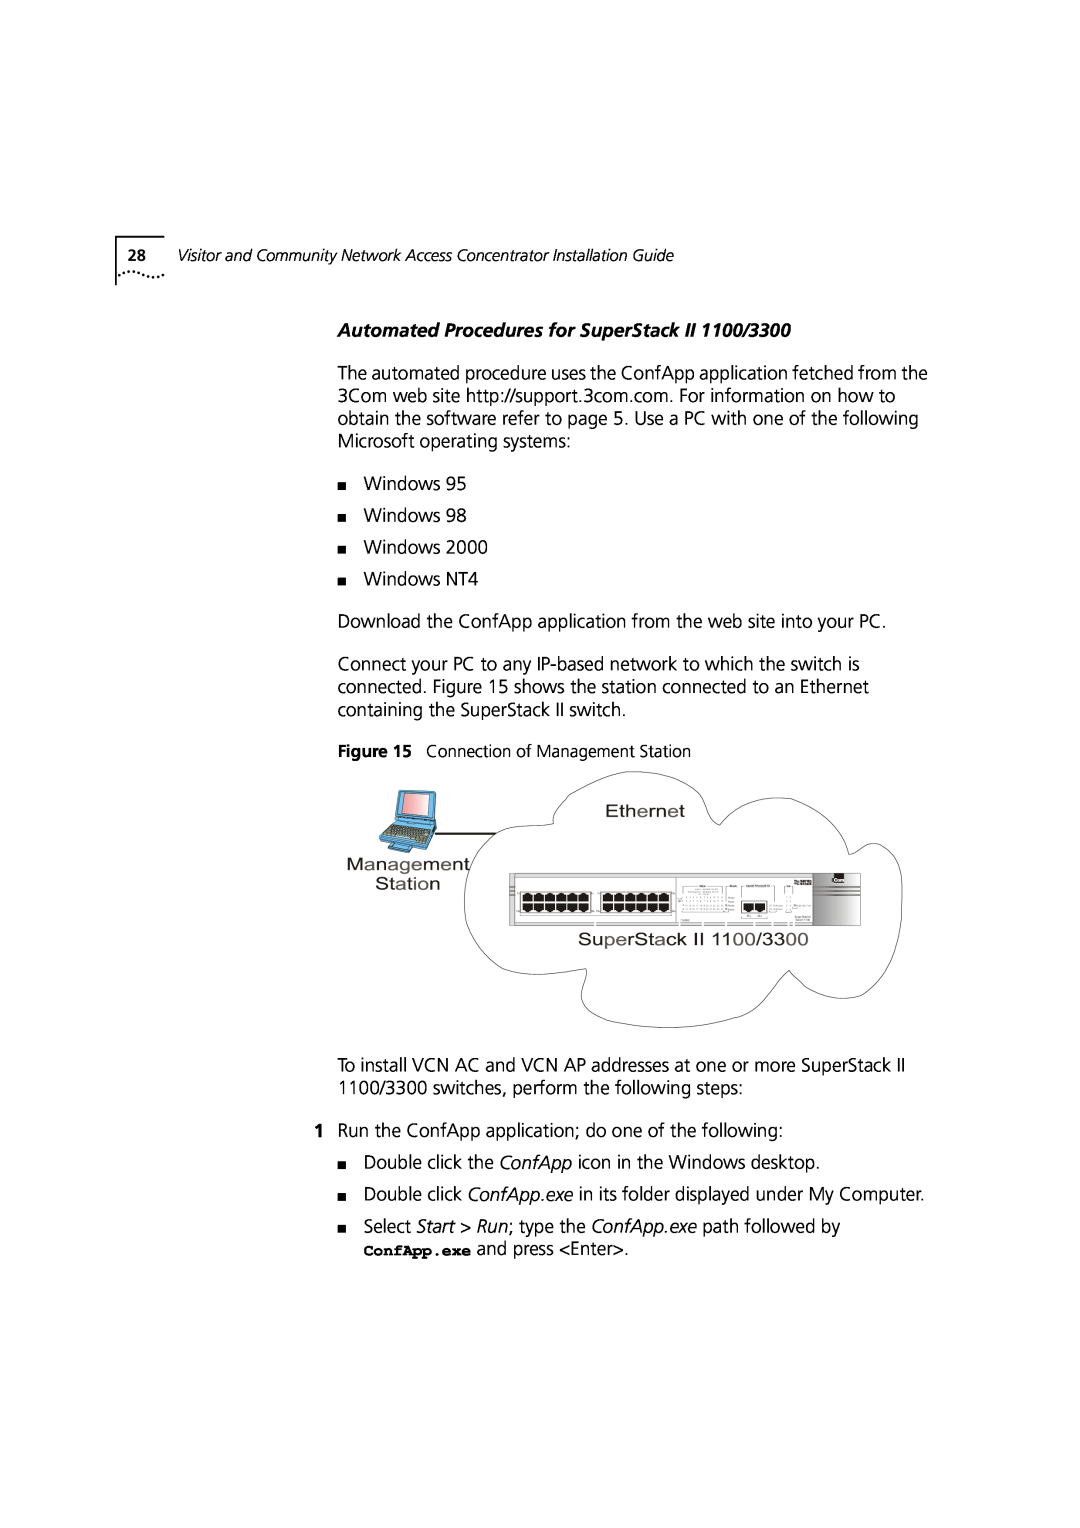 3Com DIA3CV1100-02 manual Automated Procedures for SuperStack II 1100/3300 